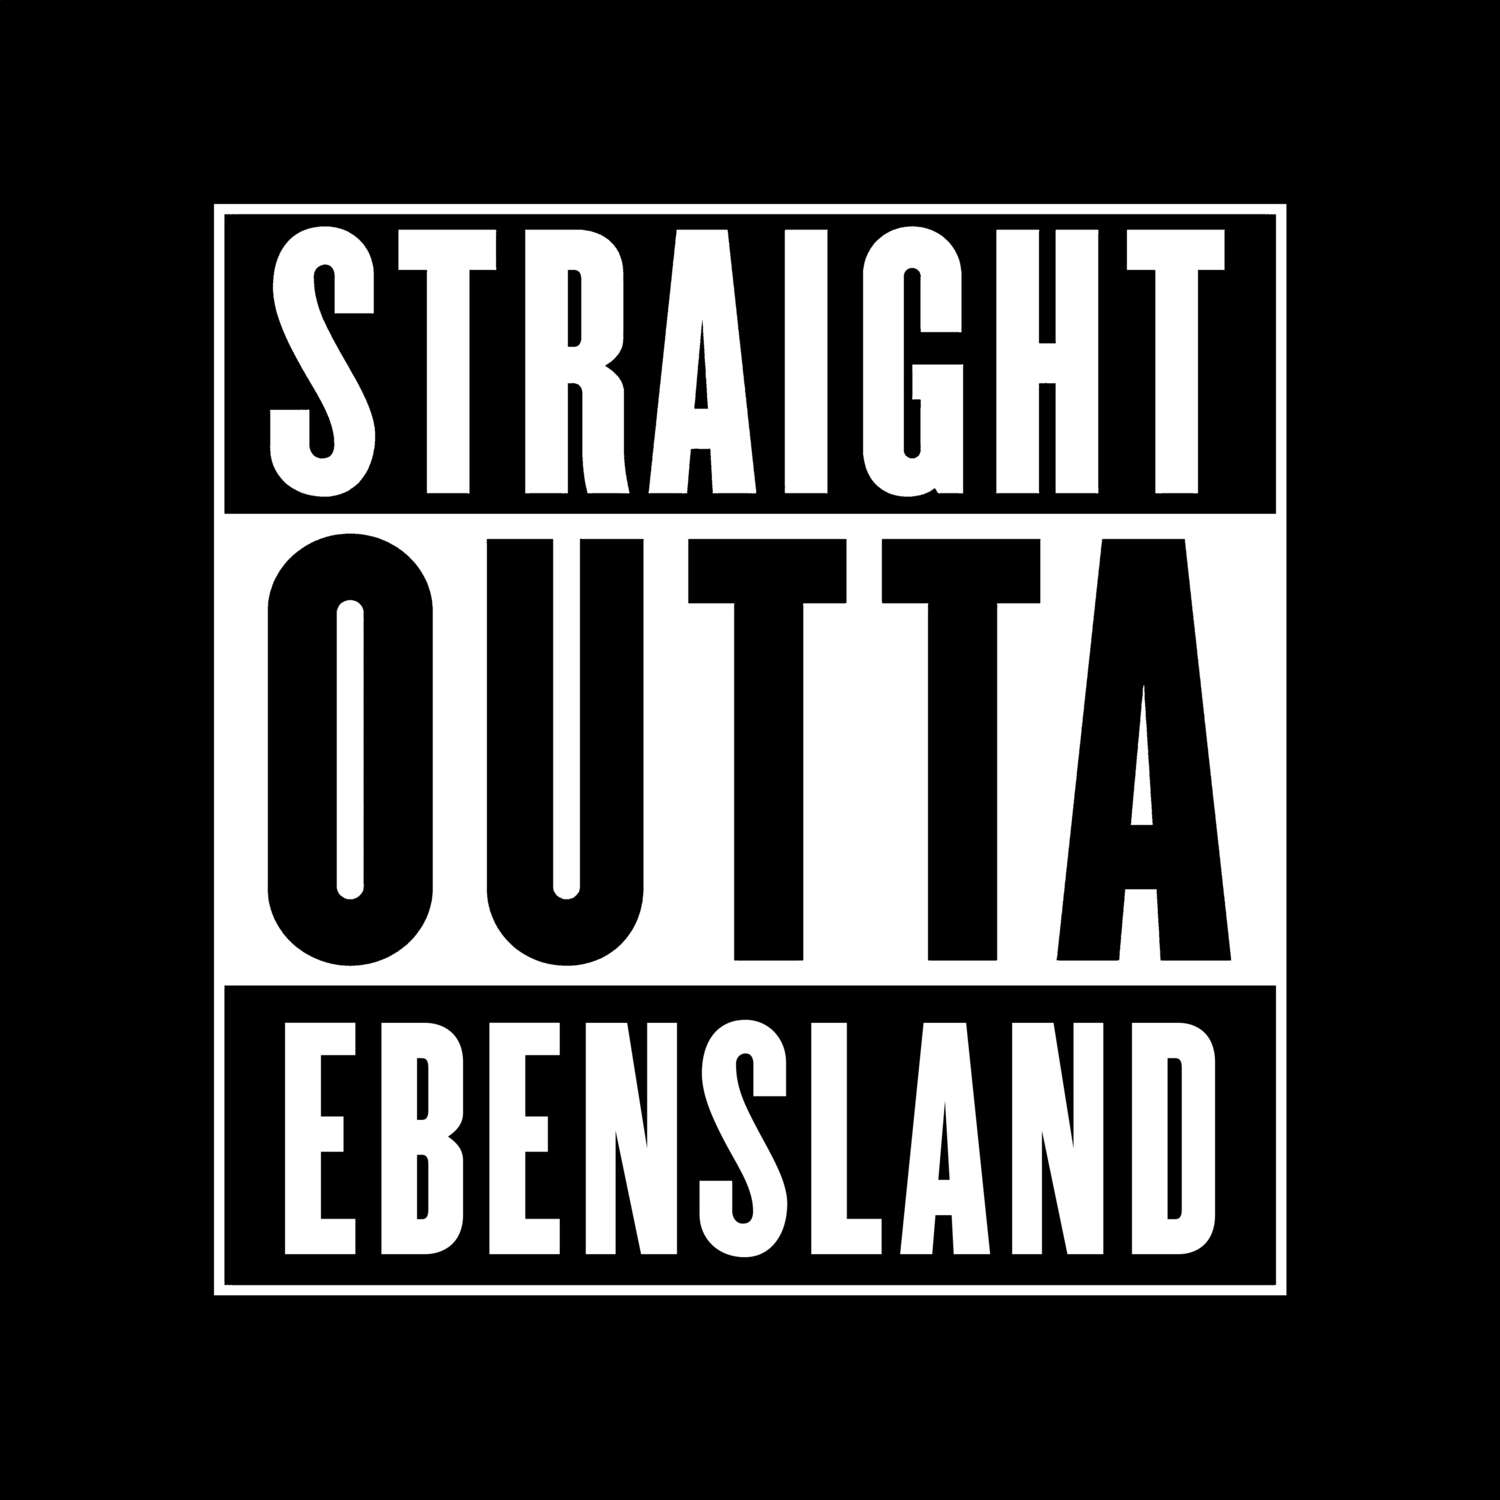 Ebensland T-Shirt »Straight Outta«